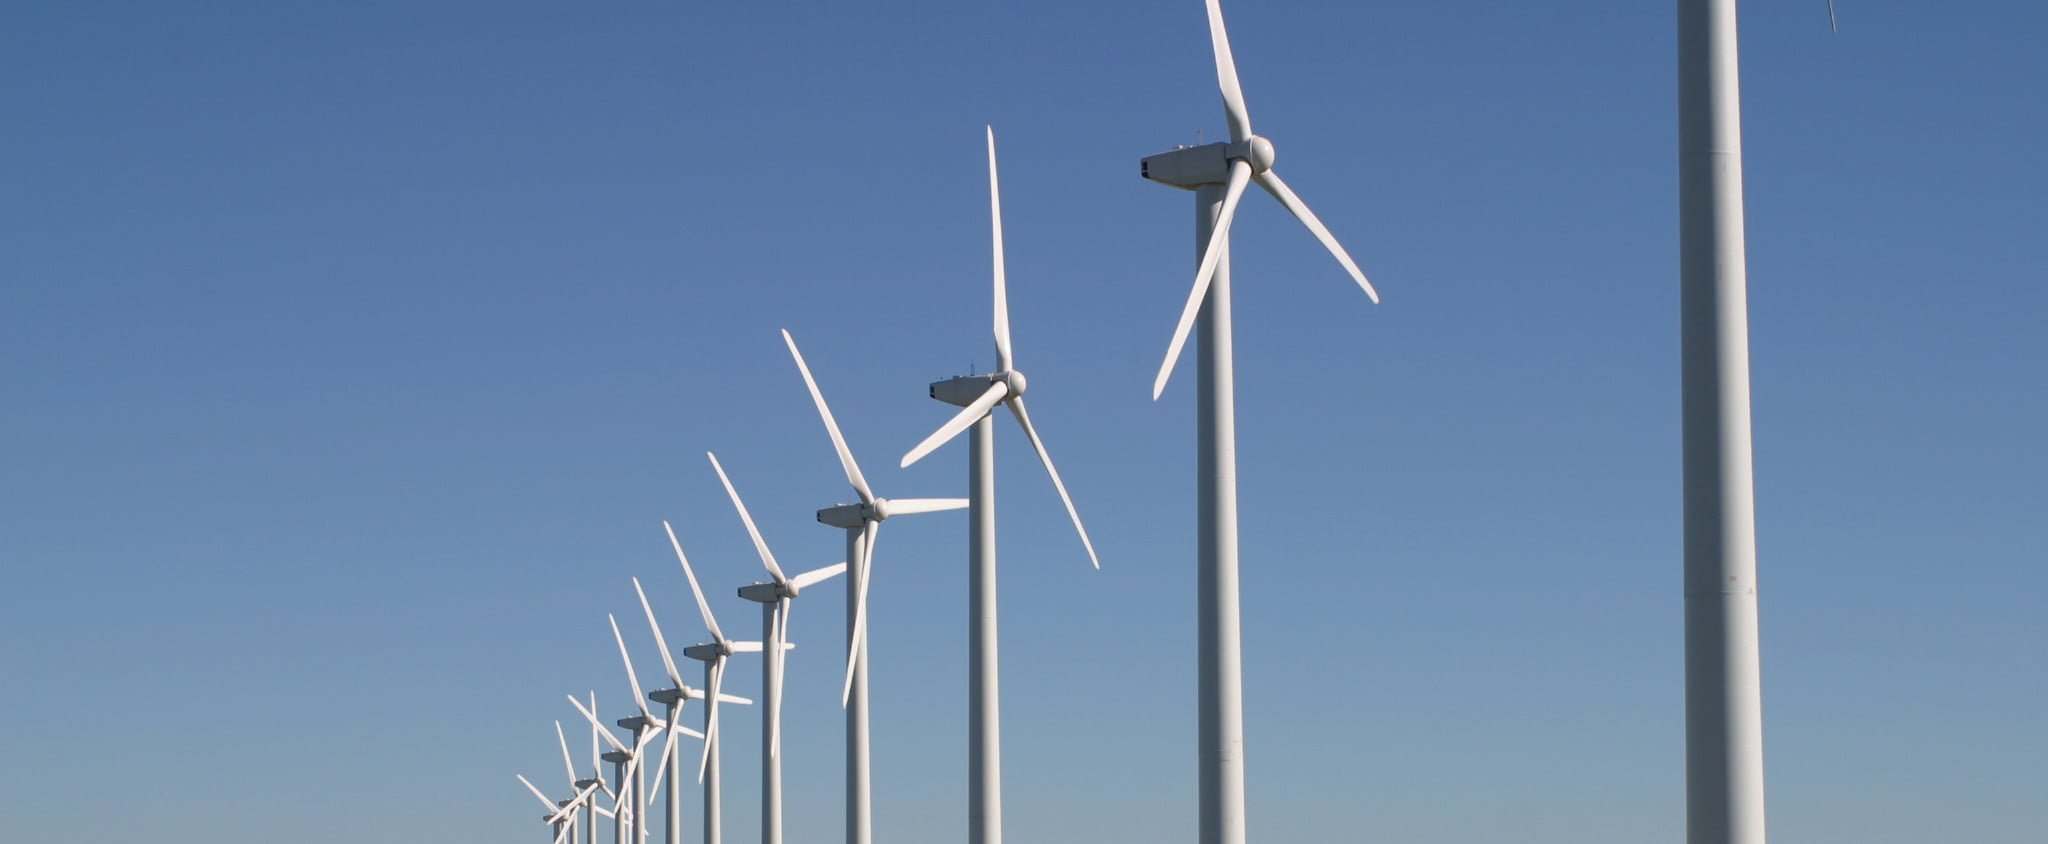 Wind Turbines E1426716313492 مجلة نقطة العلمية